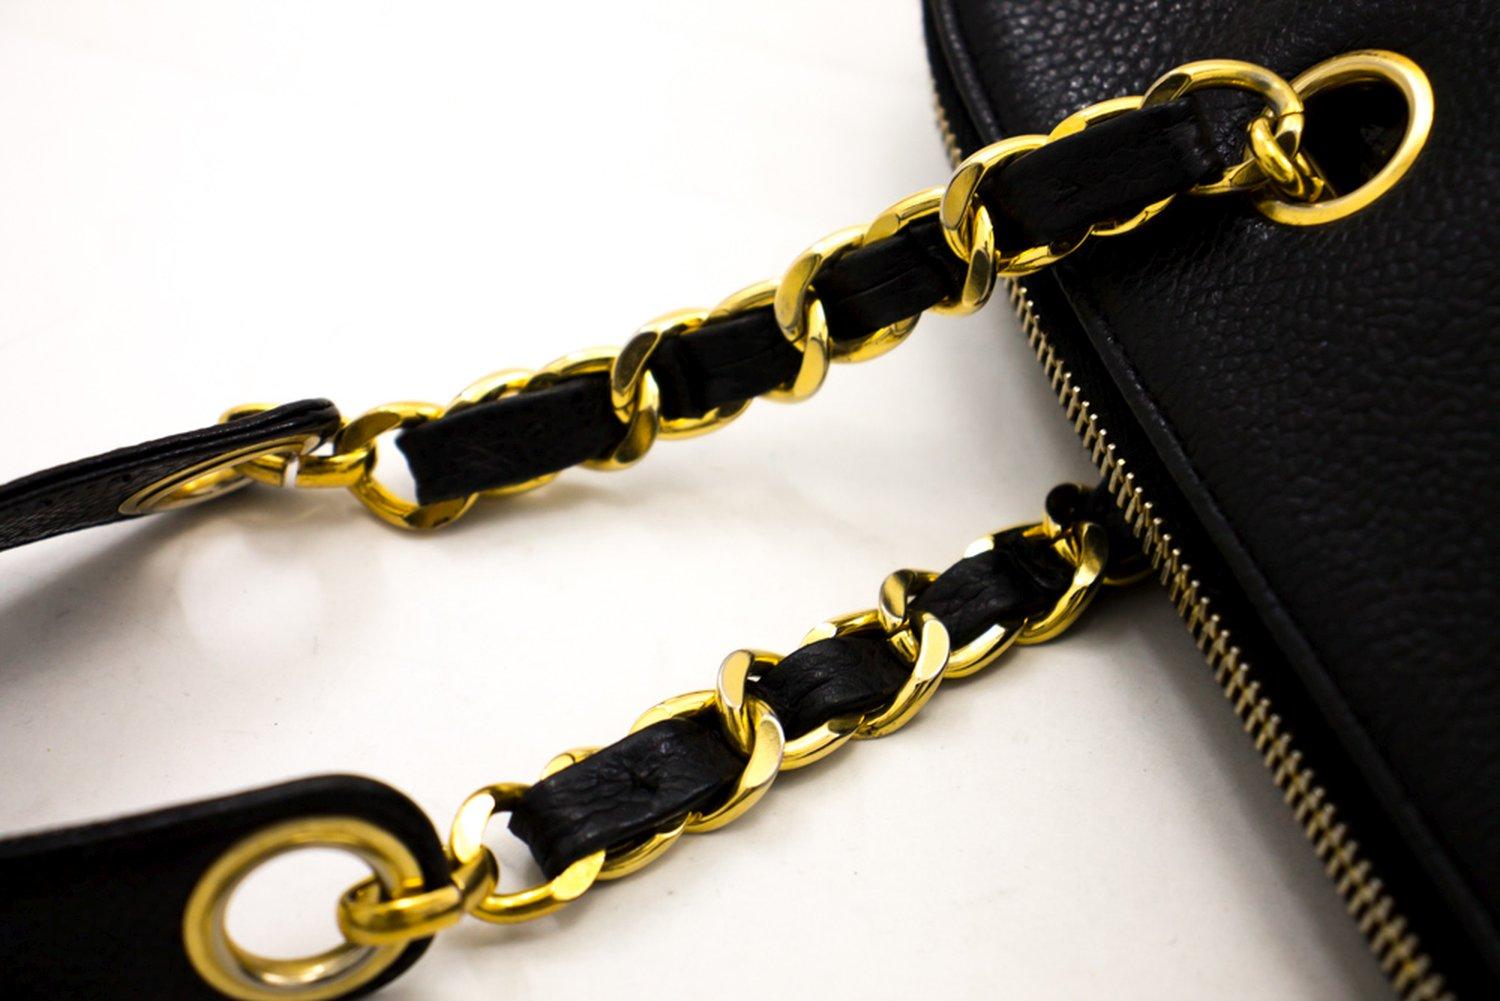 CHANEL Caviar Jumbo Large Chain Shoulder Bag Black Zip Goldper 10